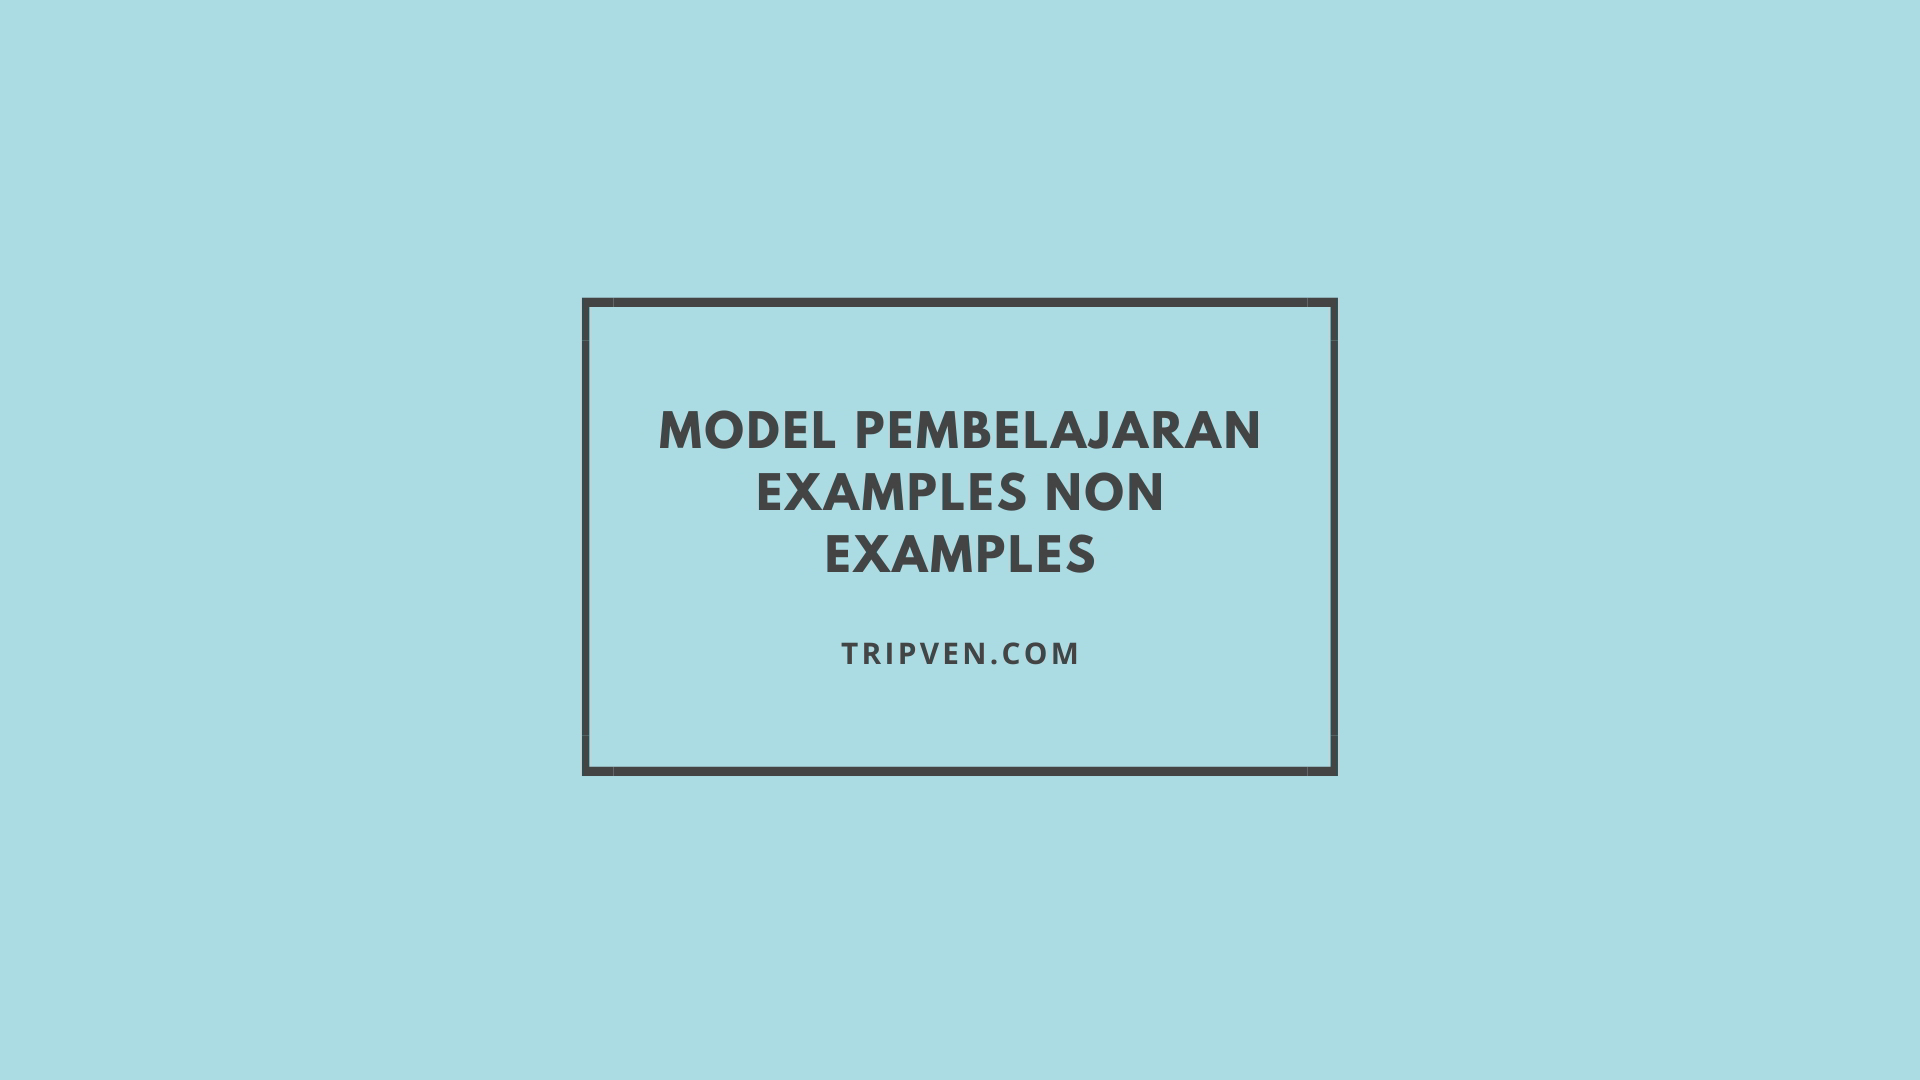 Model Pembelajaran Examples Non Examples